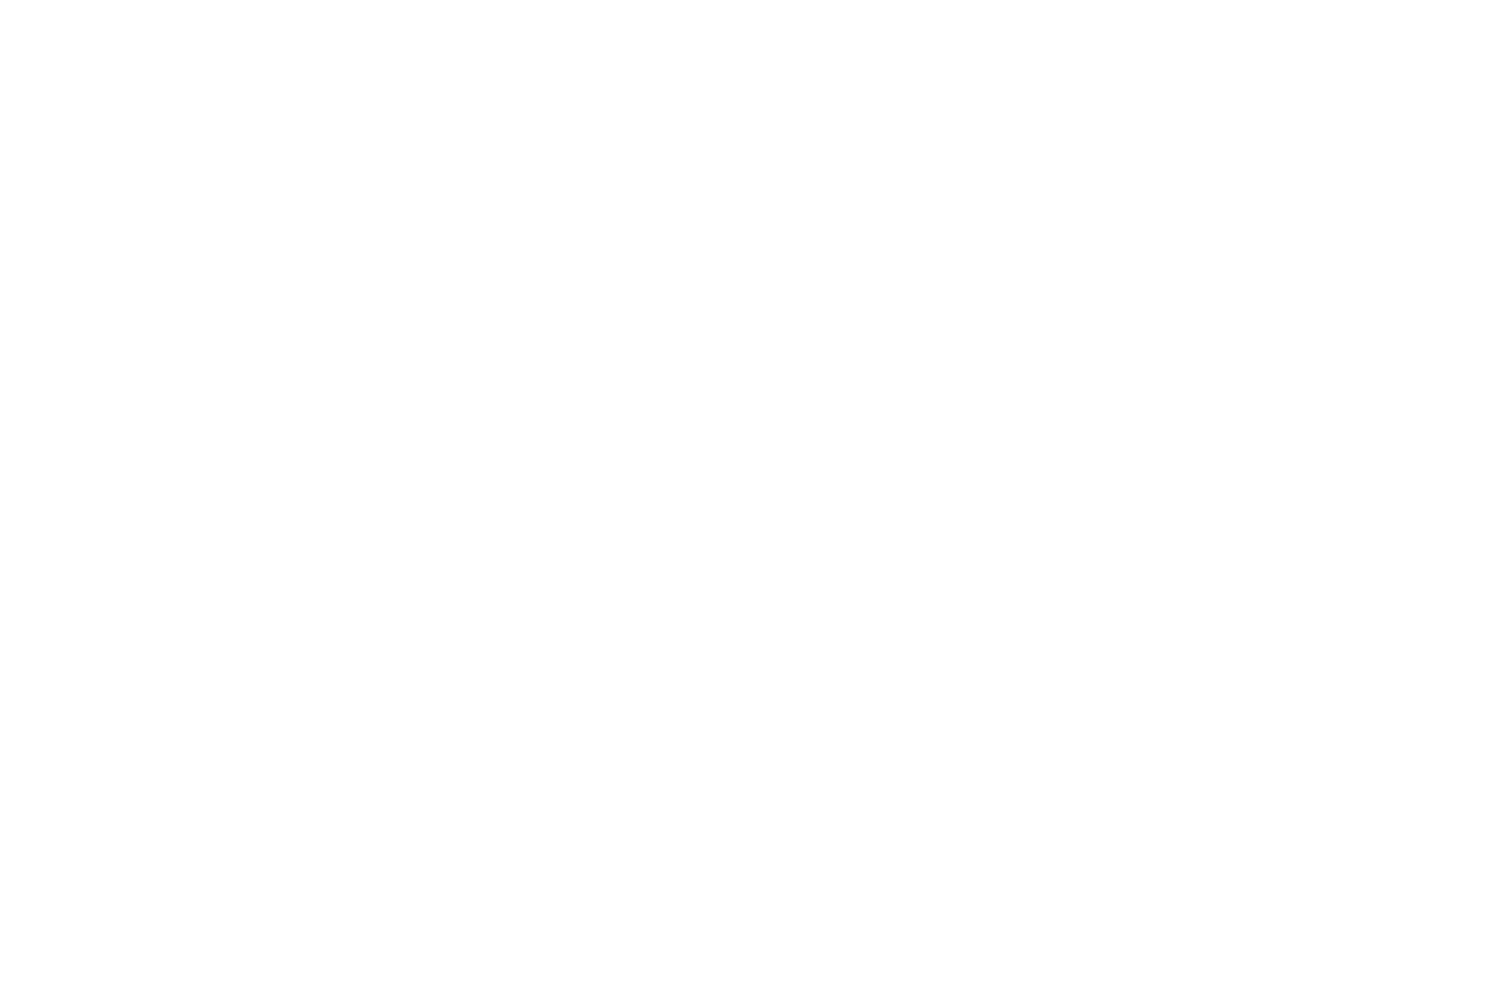 Uber logo in white